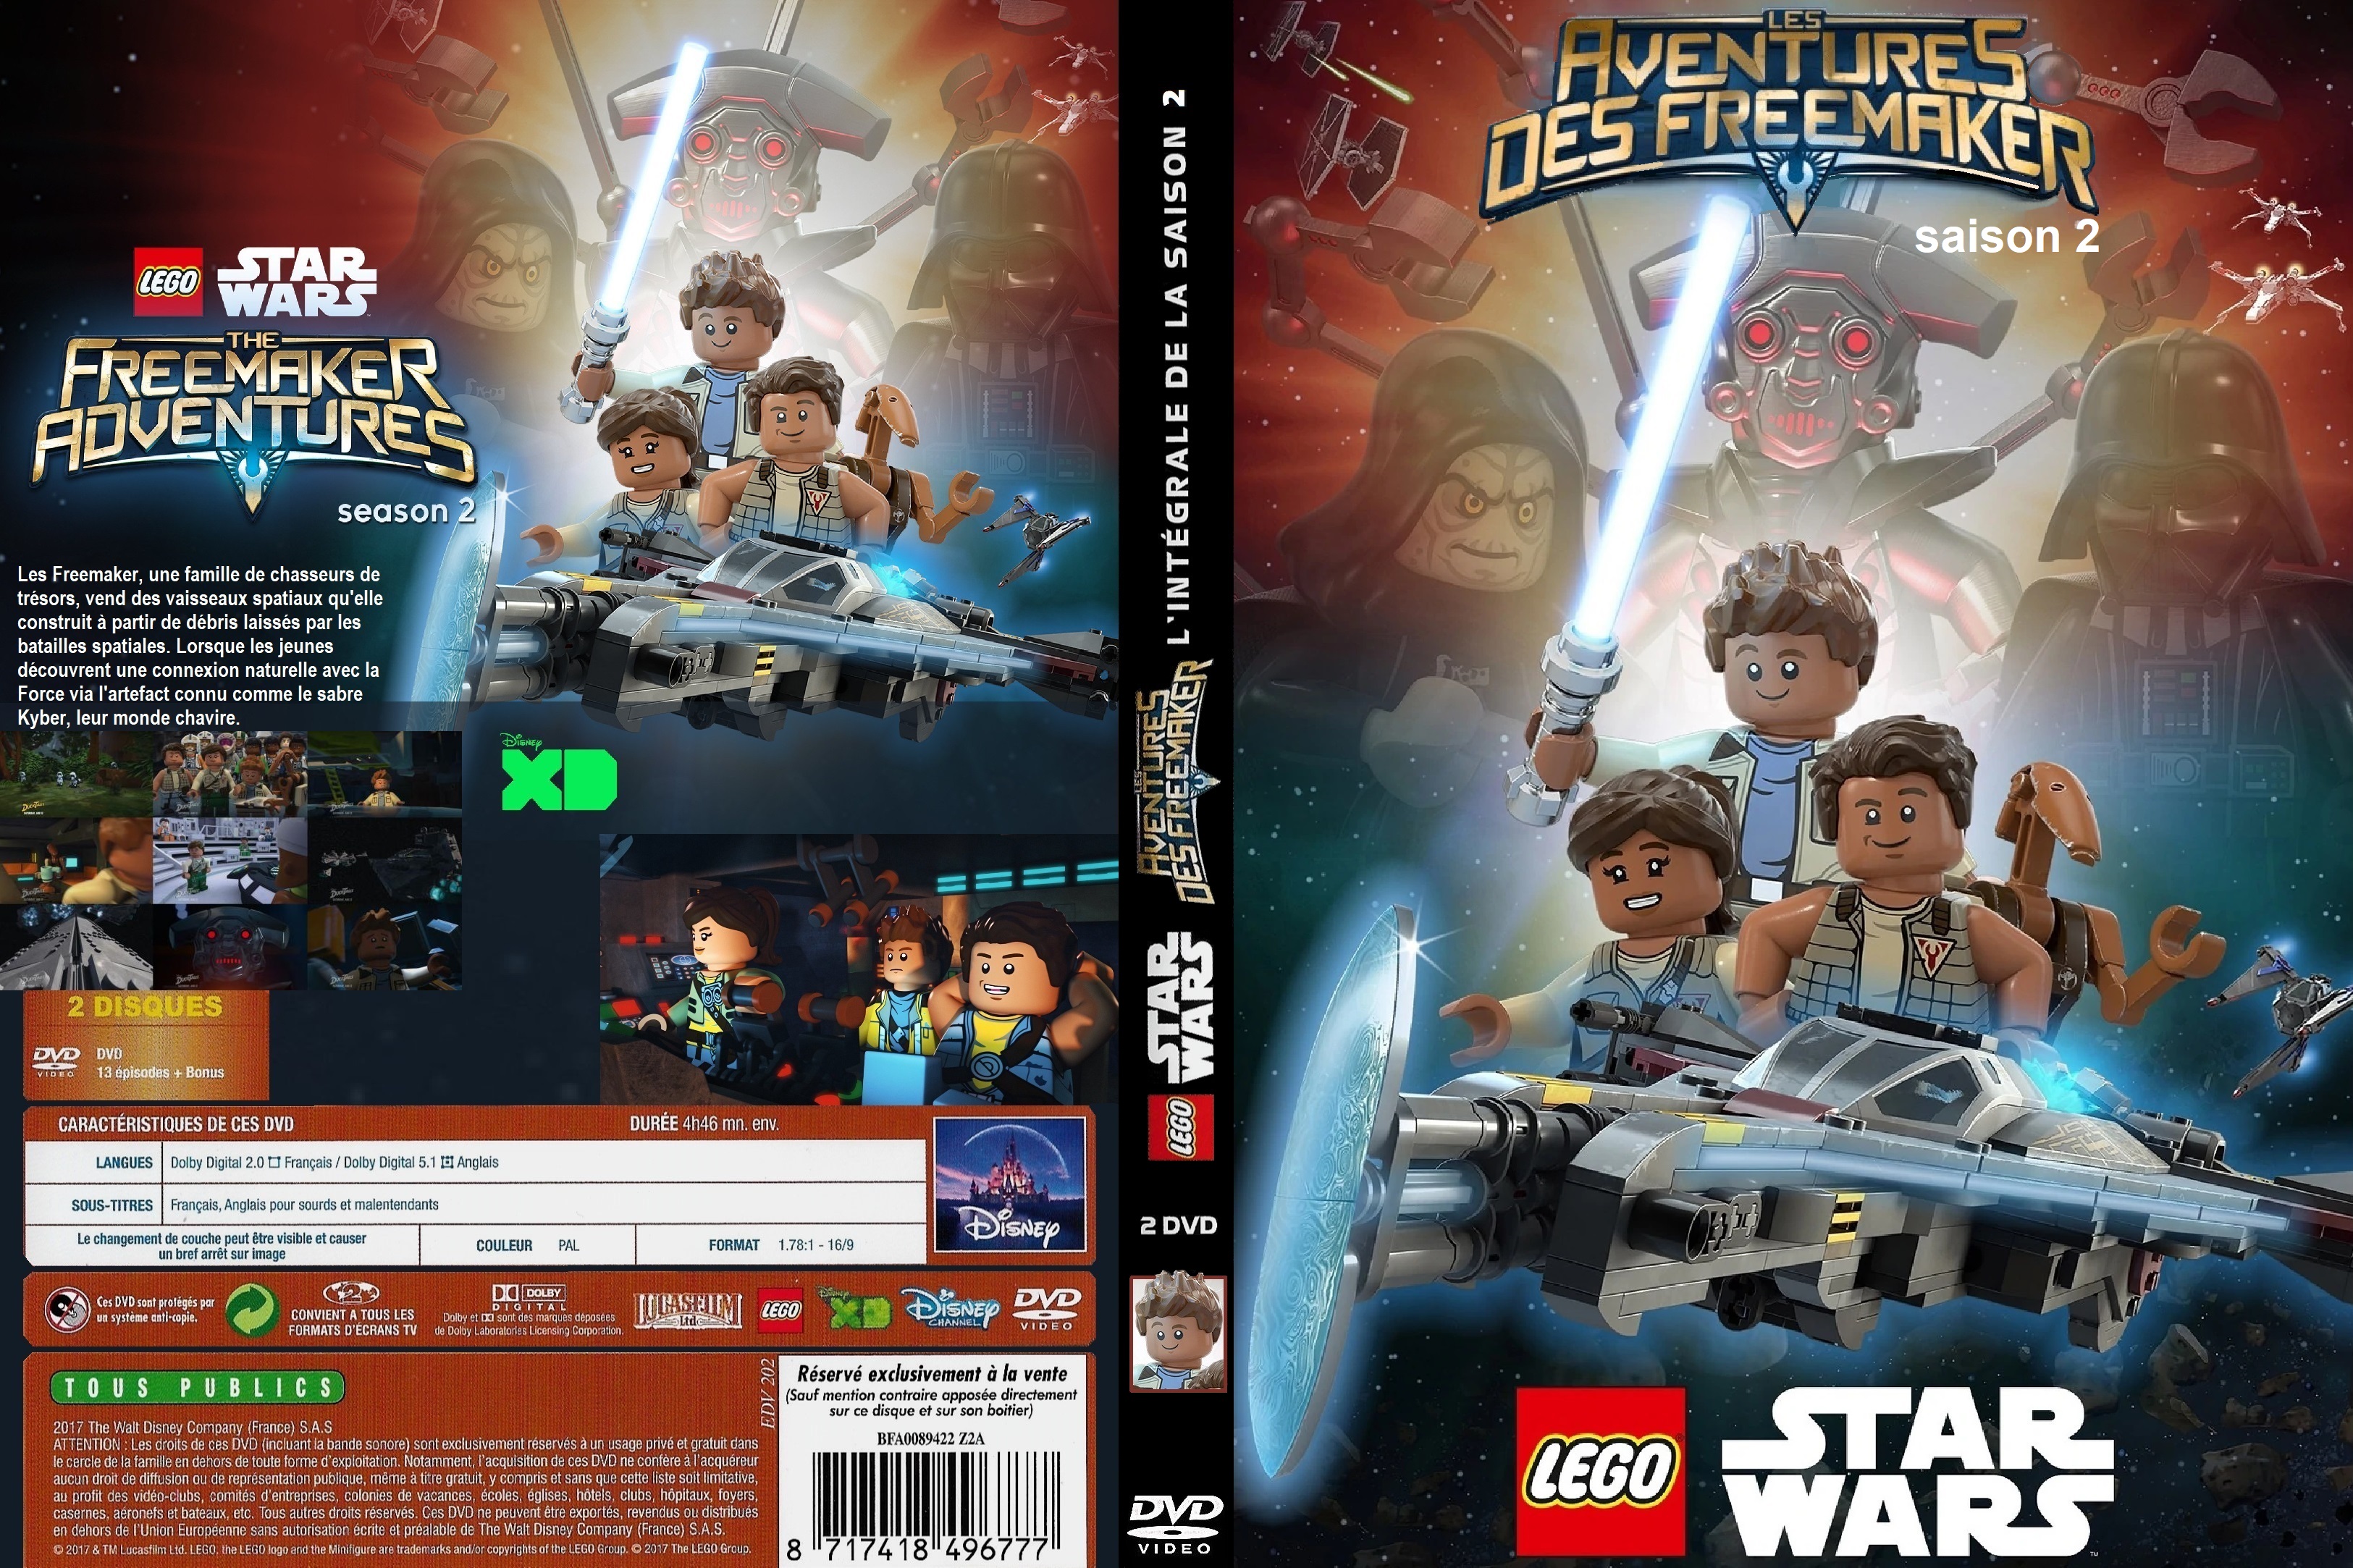 Jaquette DVD Lego Star Wars Les Aventures des Freemaker saison 2 custom